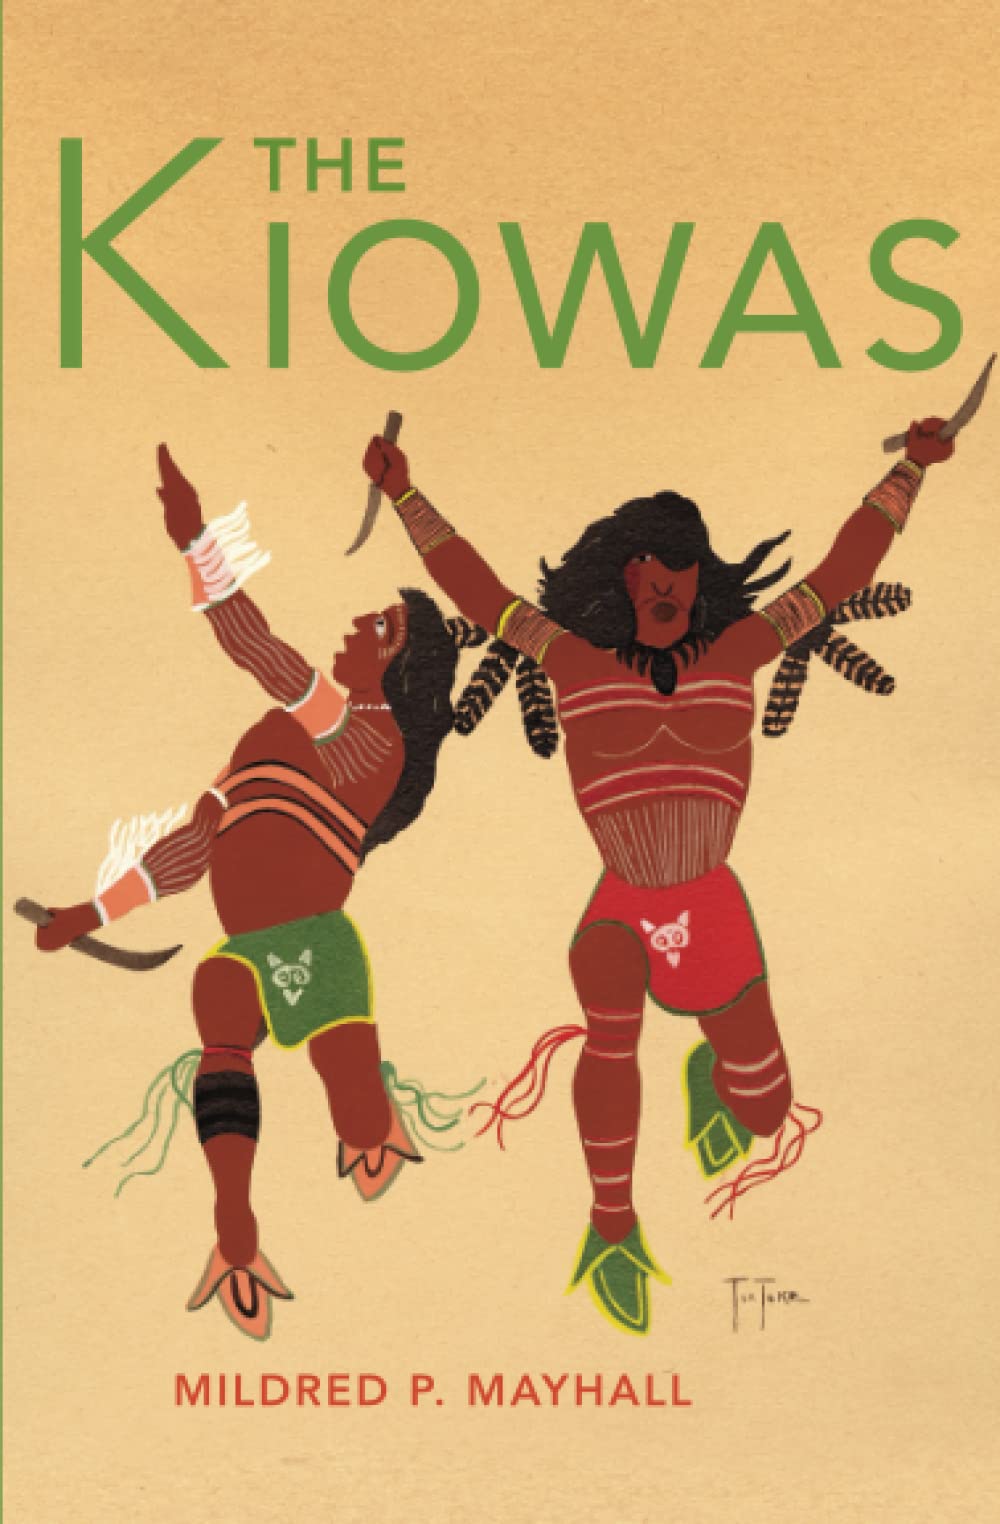 The Kiowas by Mildred P. Mayhall